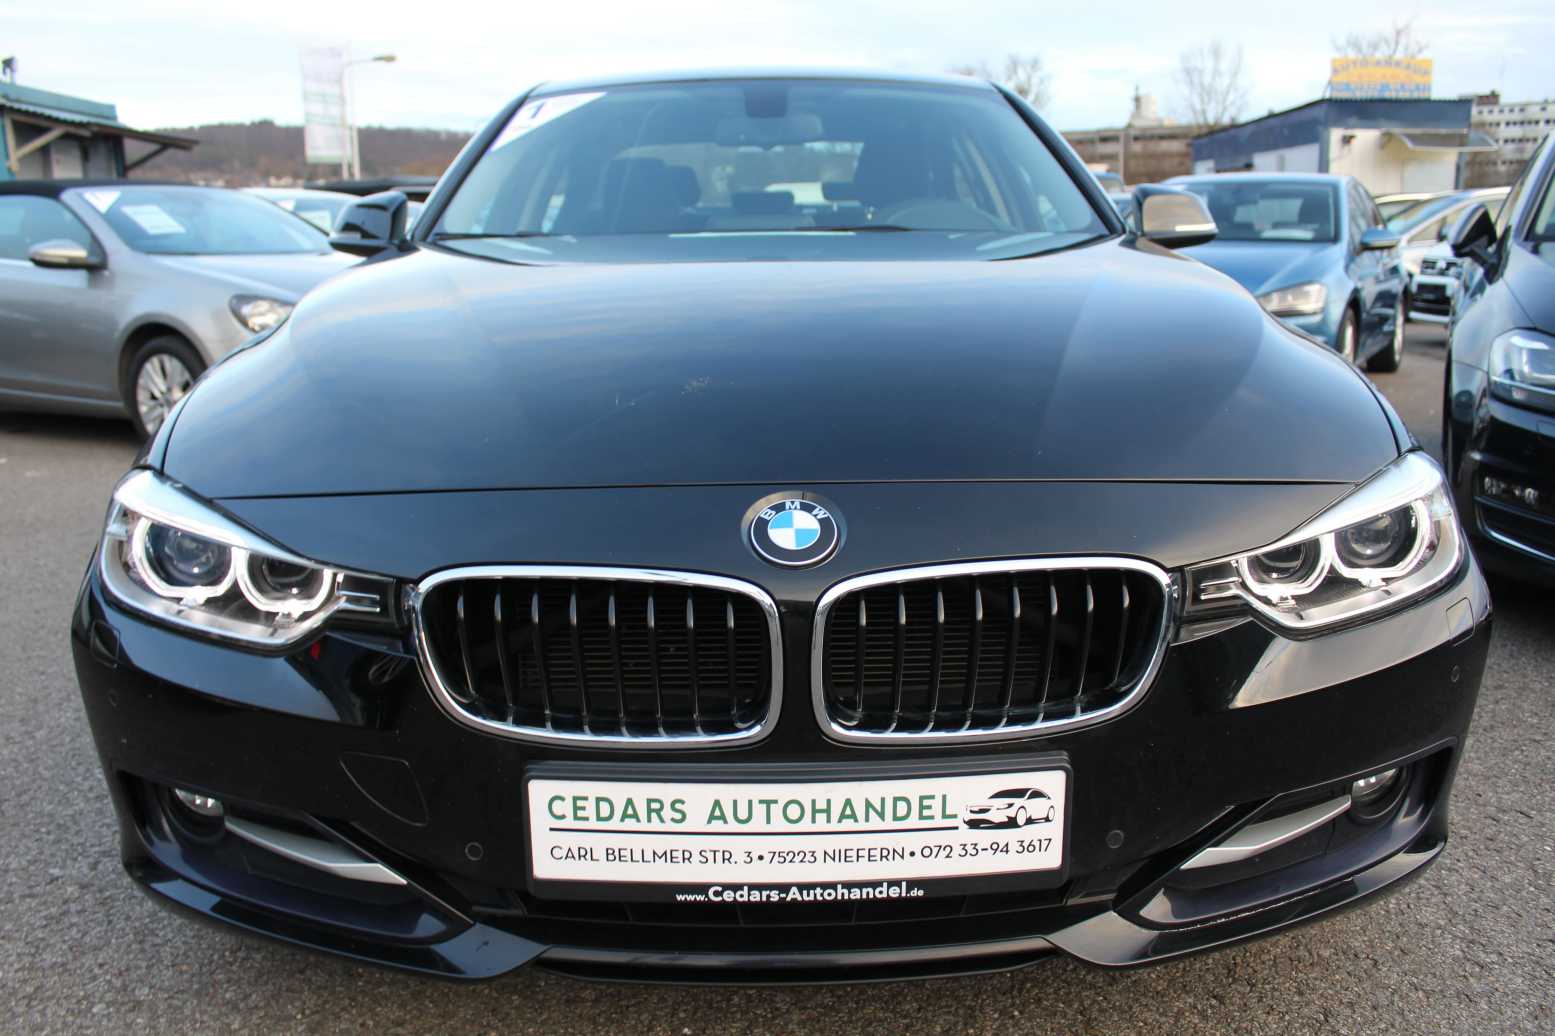 BMW Cedars Autohandel 